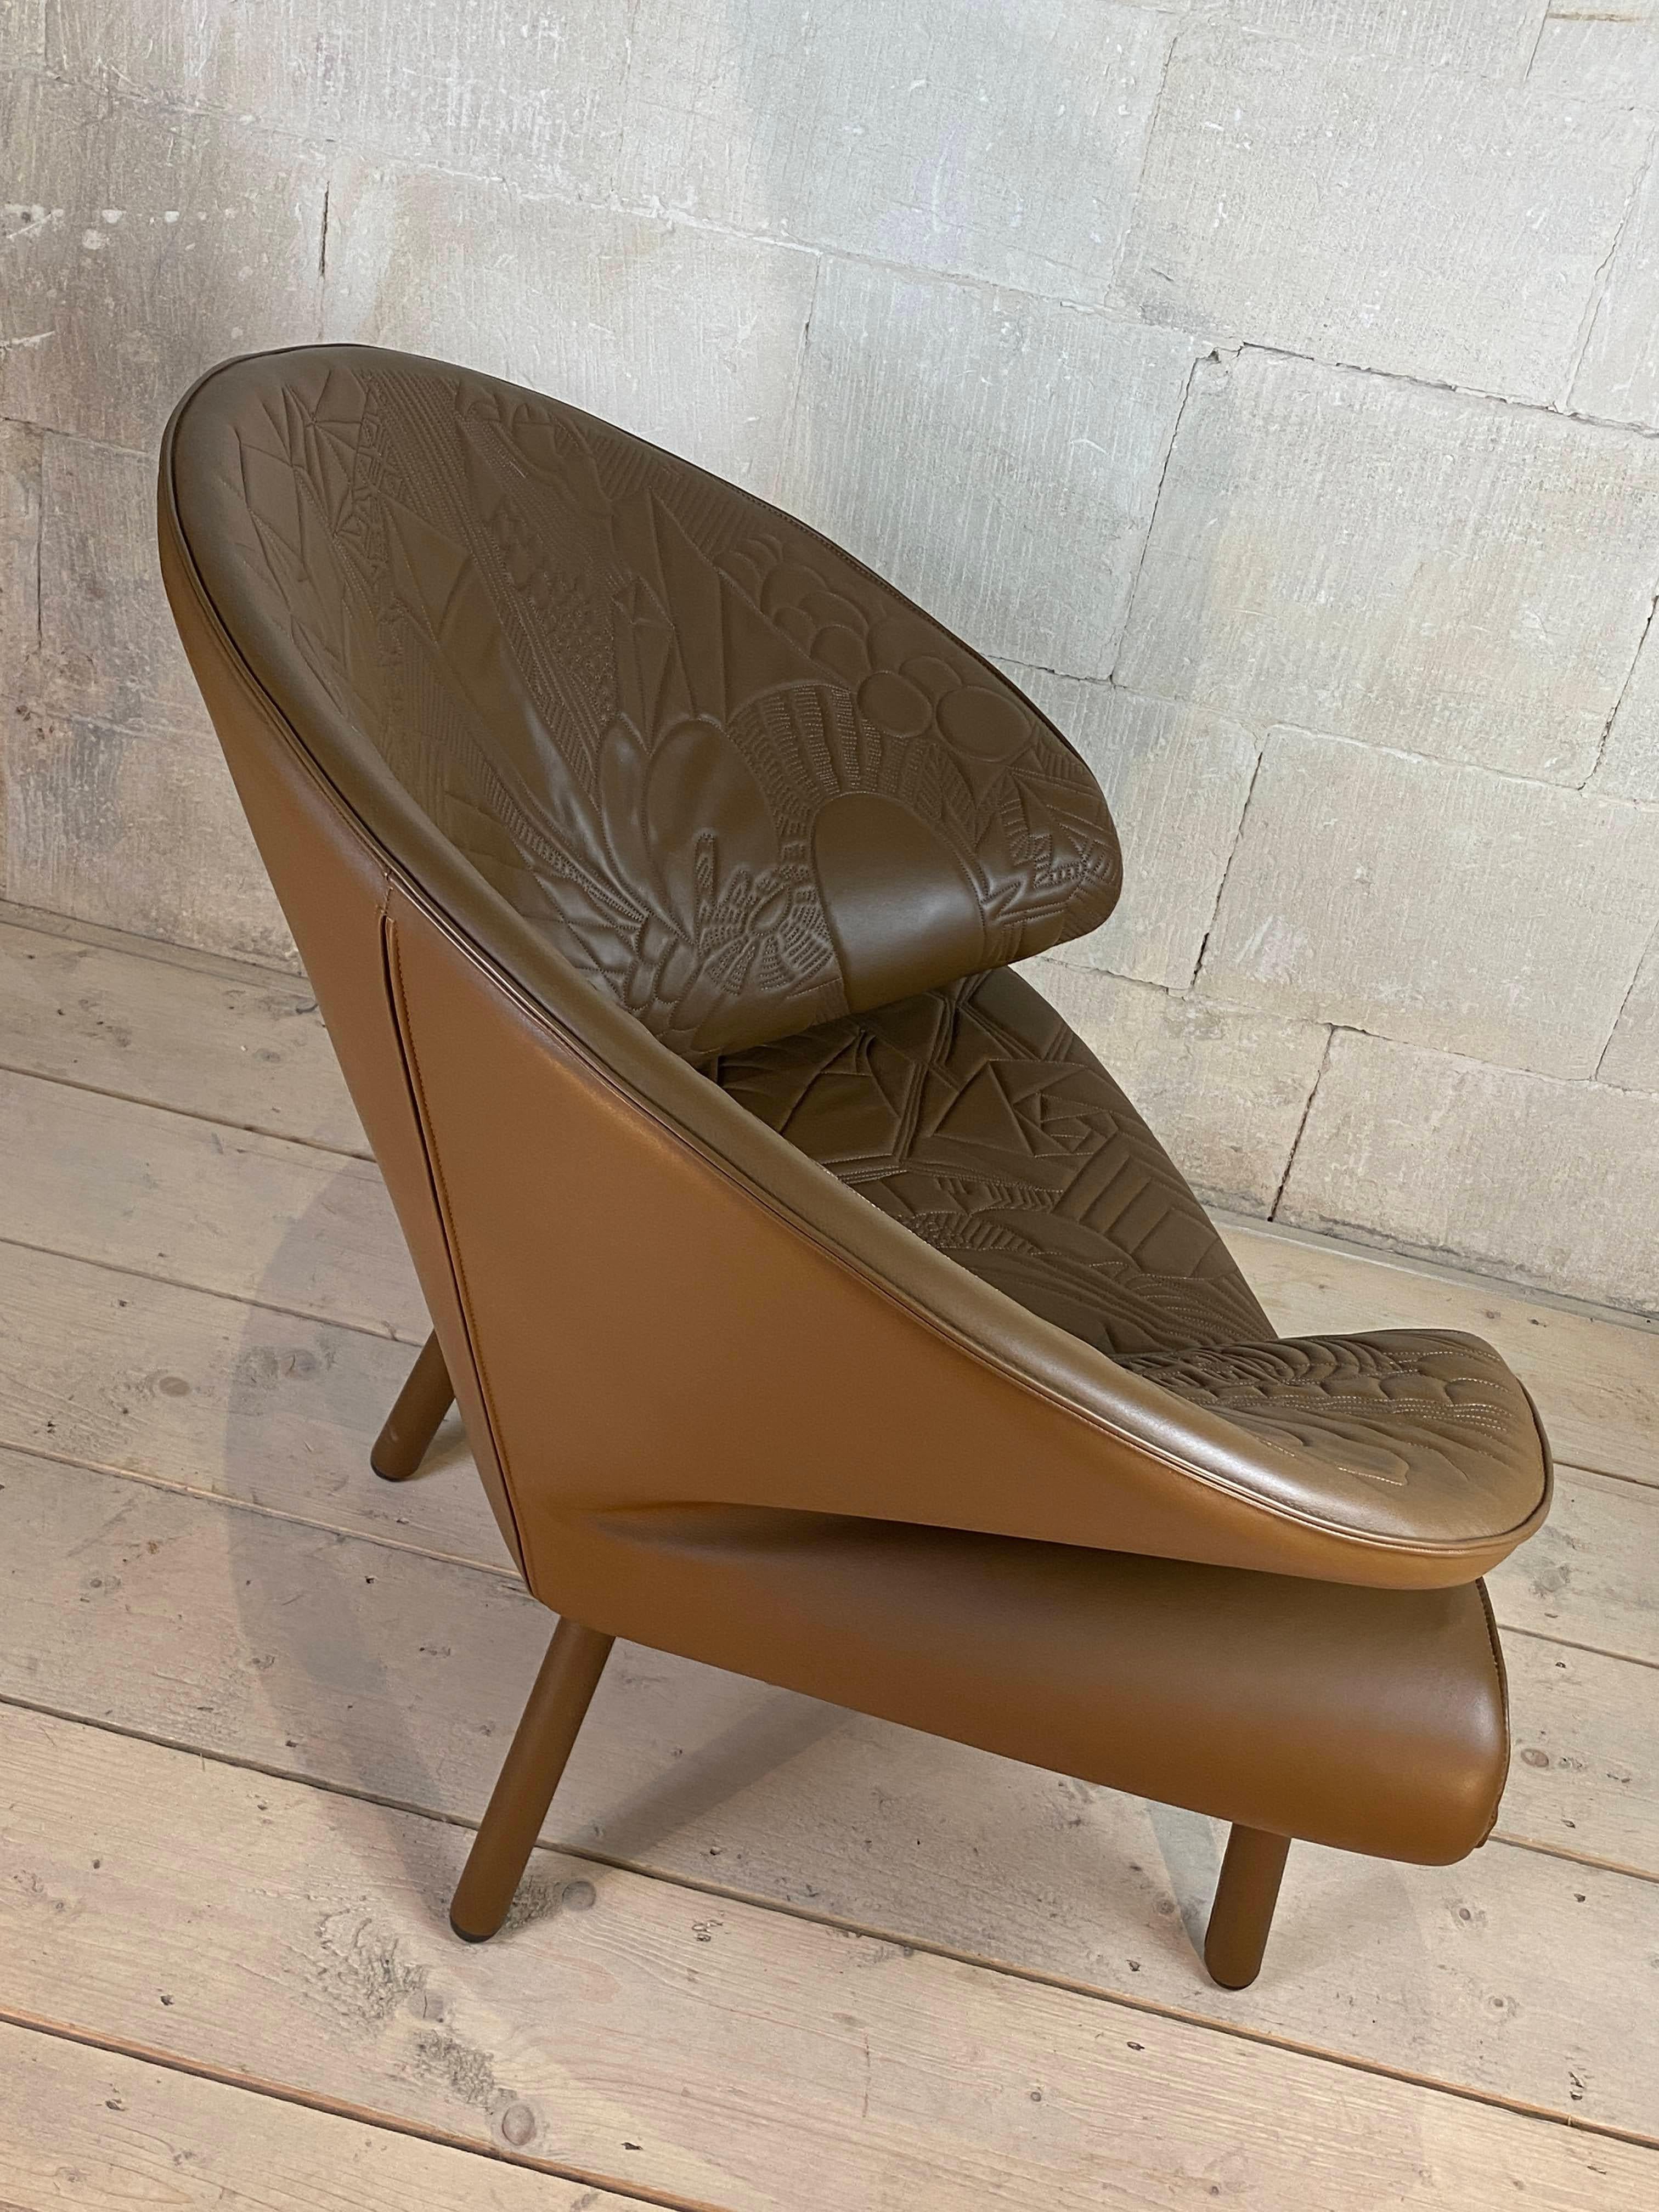 Moroso Doodle Armchair Premium Leather Italian Mid Century In Good Condition For Sale In Cheltenham, GB